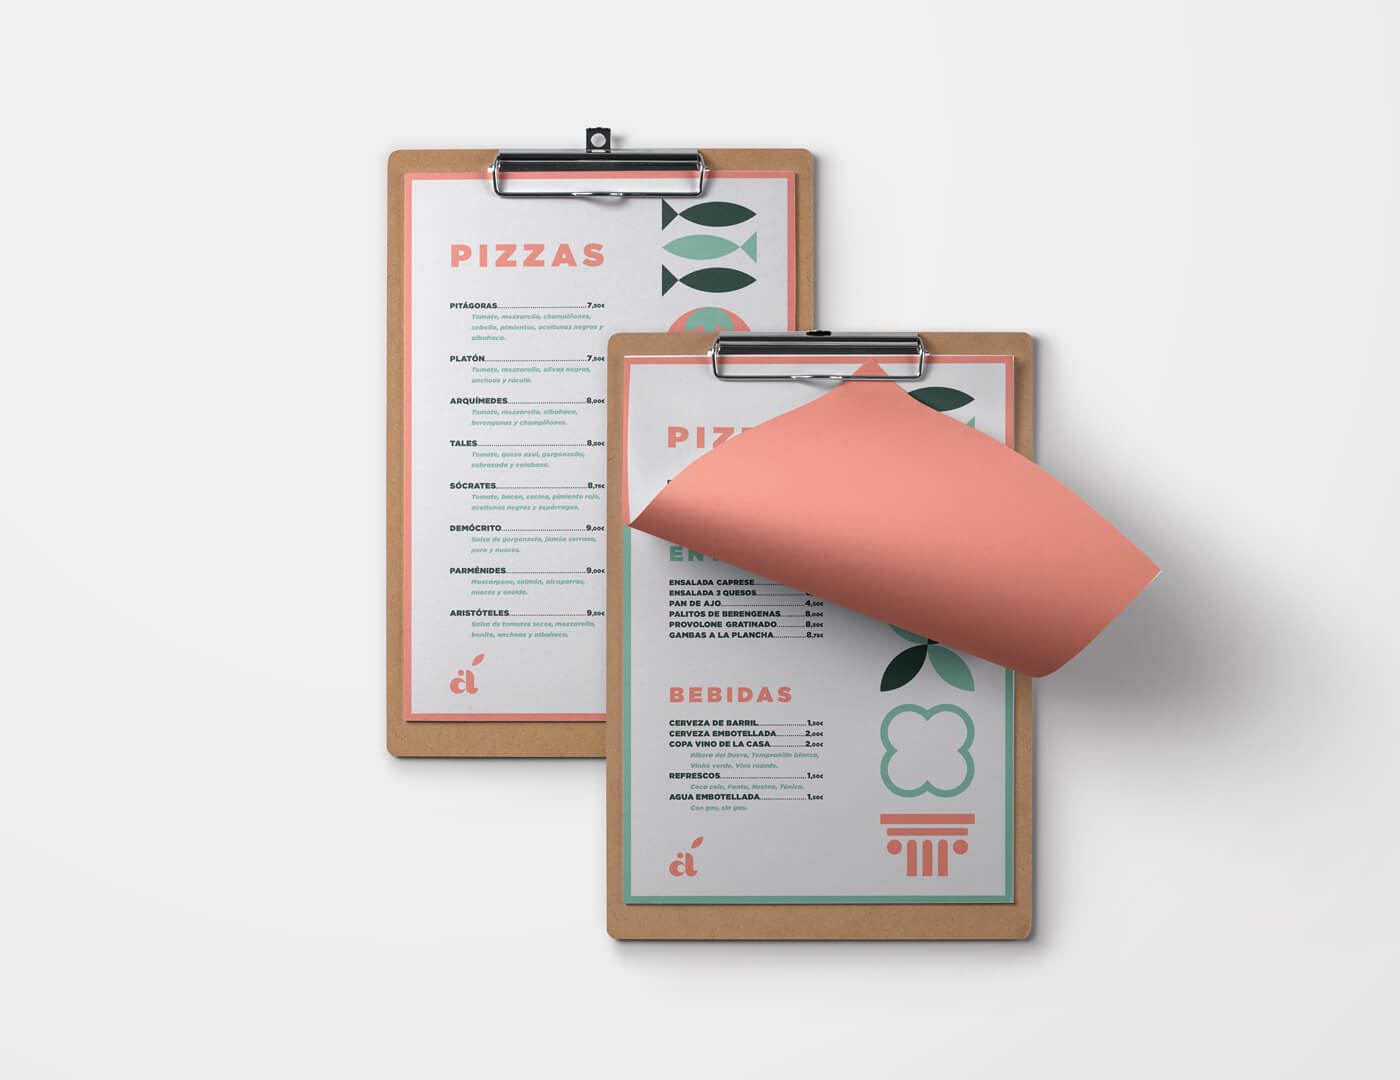 Pizzería pizzágoras - Manuel Perujo